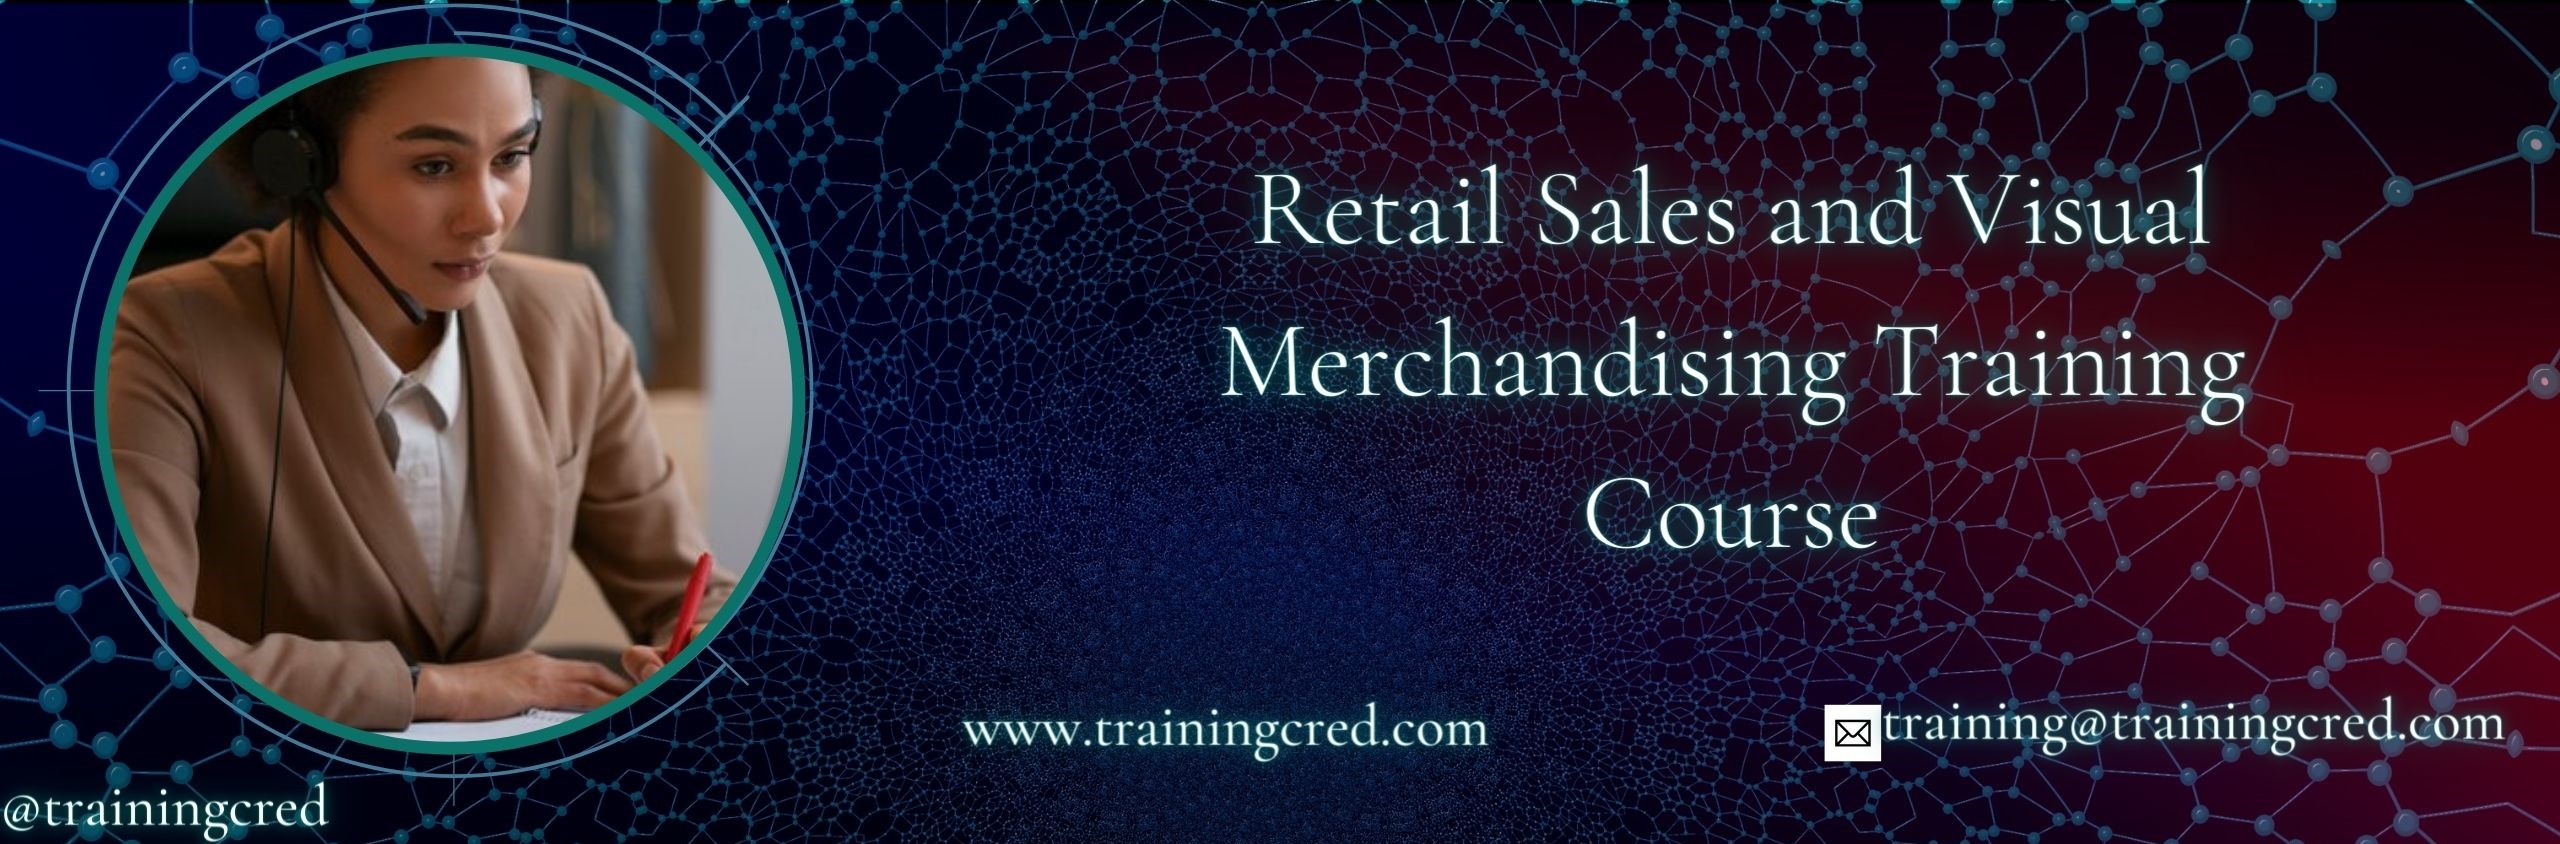 Retail Sales and Visual Merchandising Training